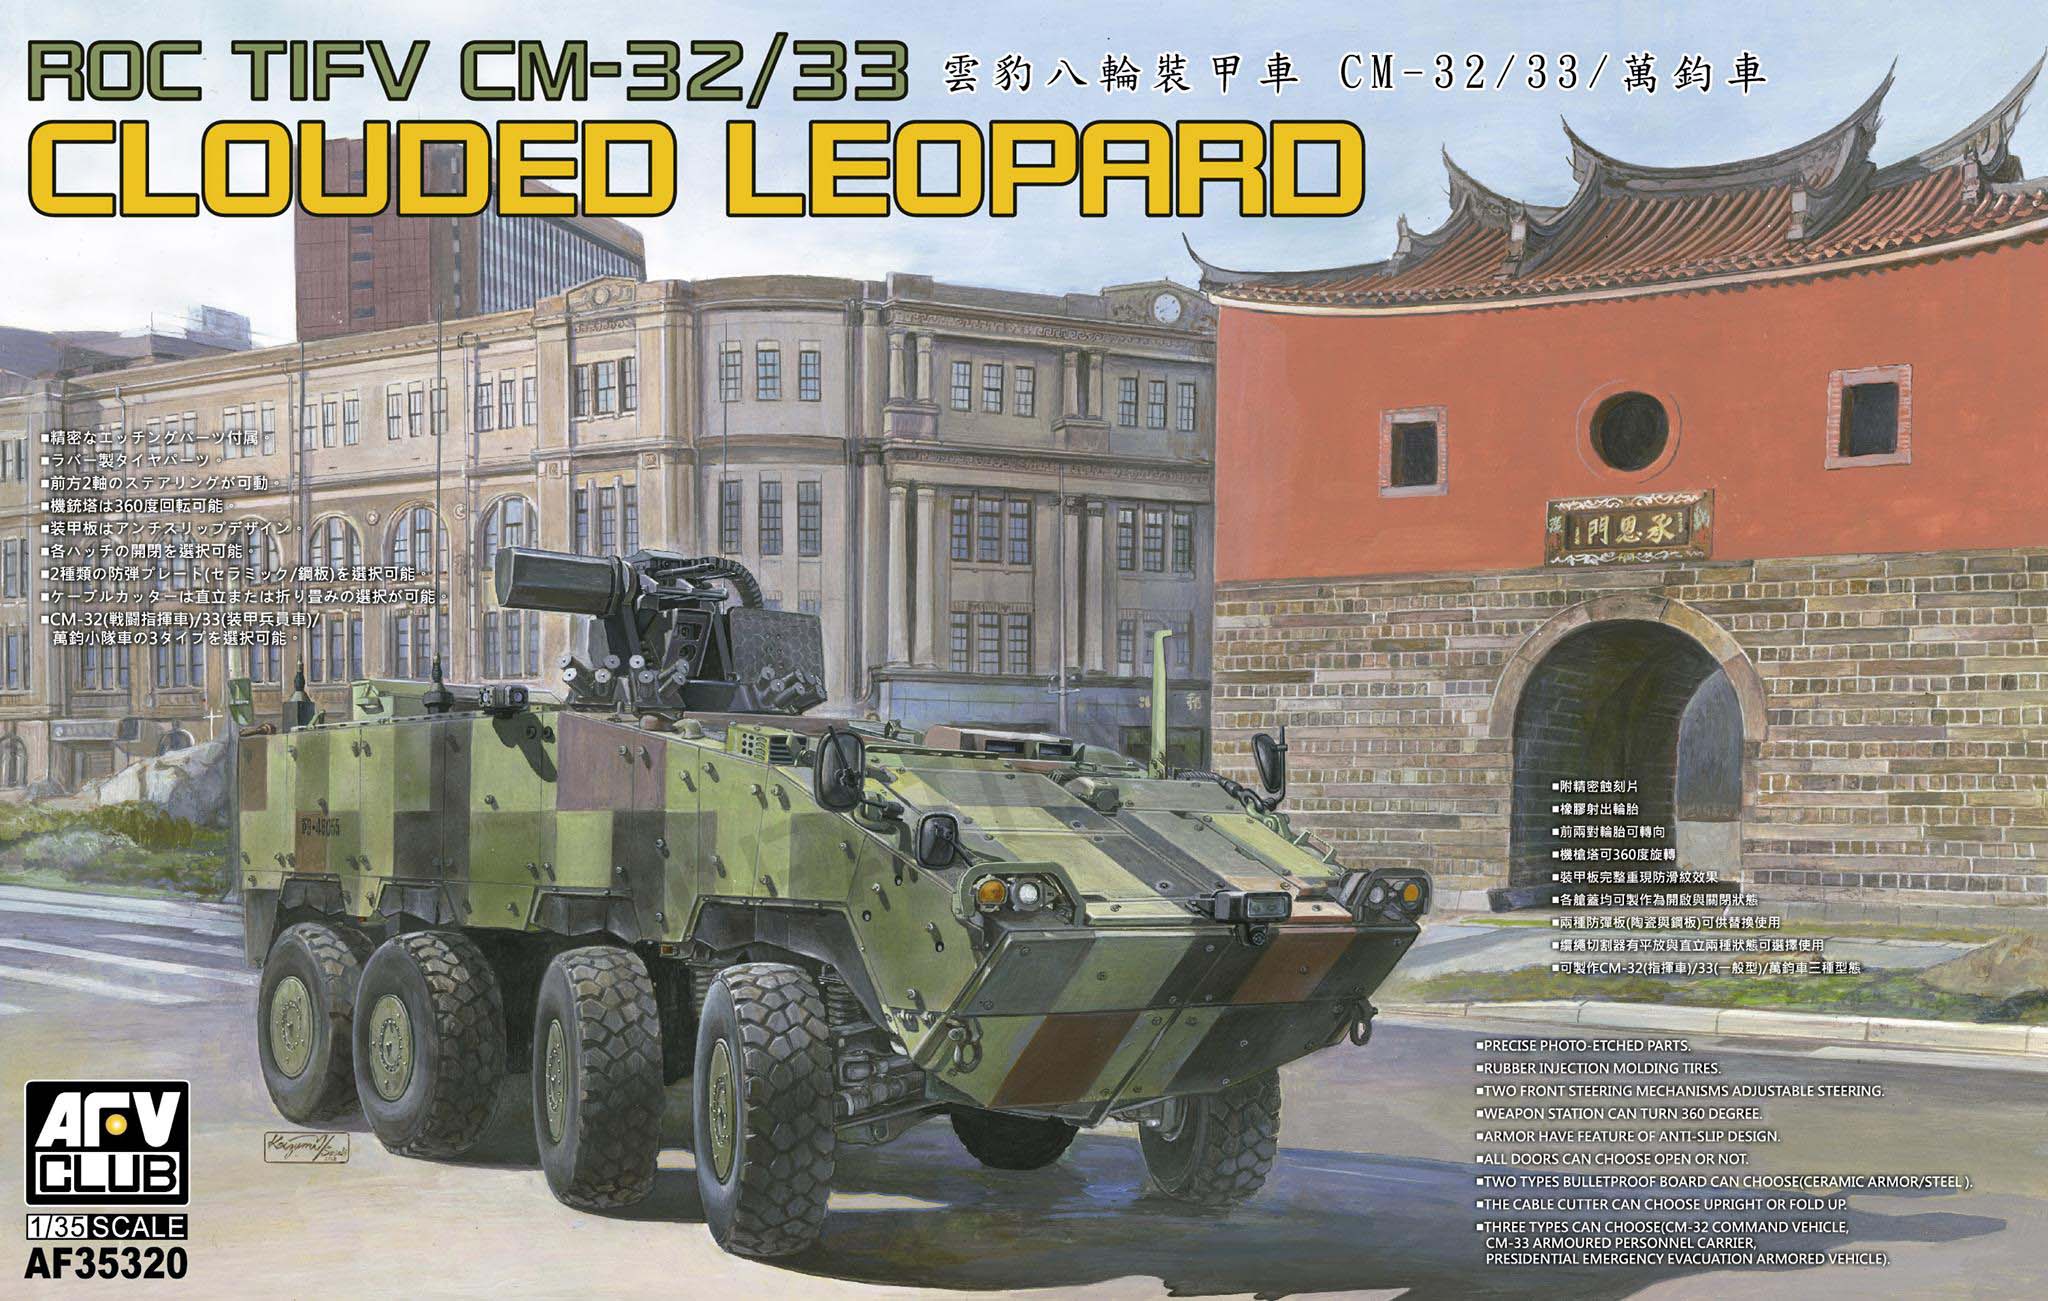 Desnatar animación Sin cabeza AF35320 ROC TIFV CM-32/33 Clouded Leopard | AFV Club | A&C Creation Hong  Kong